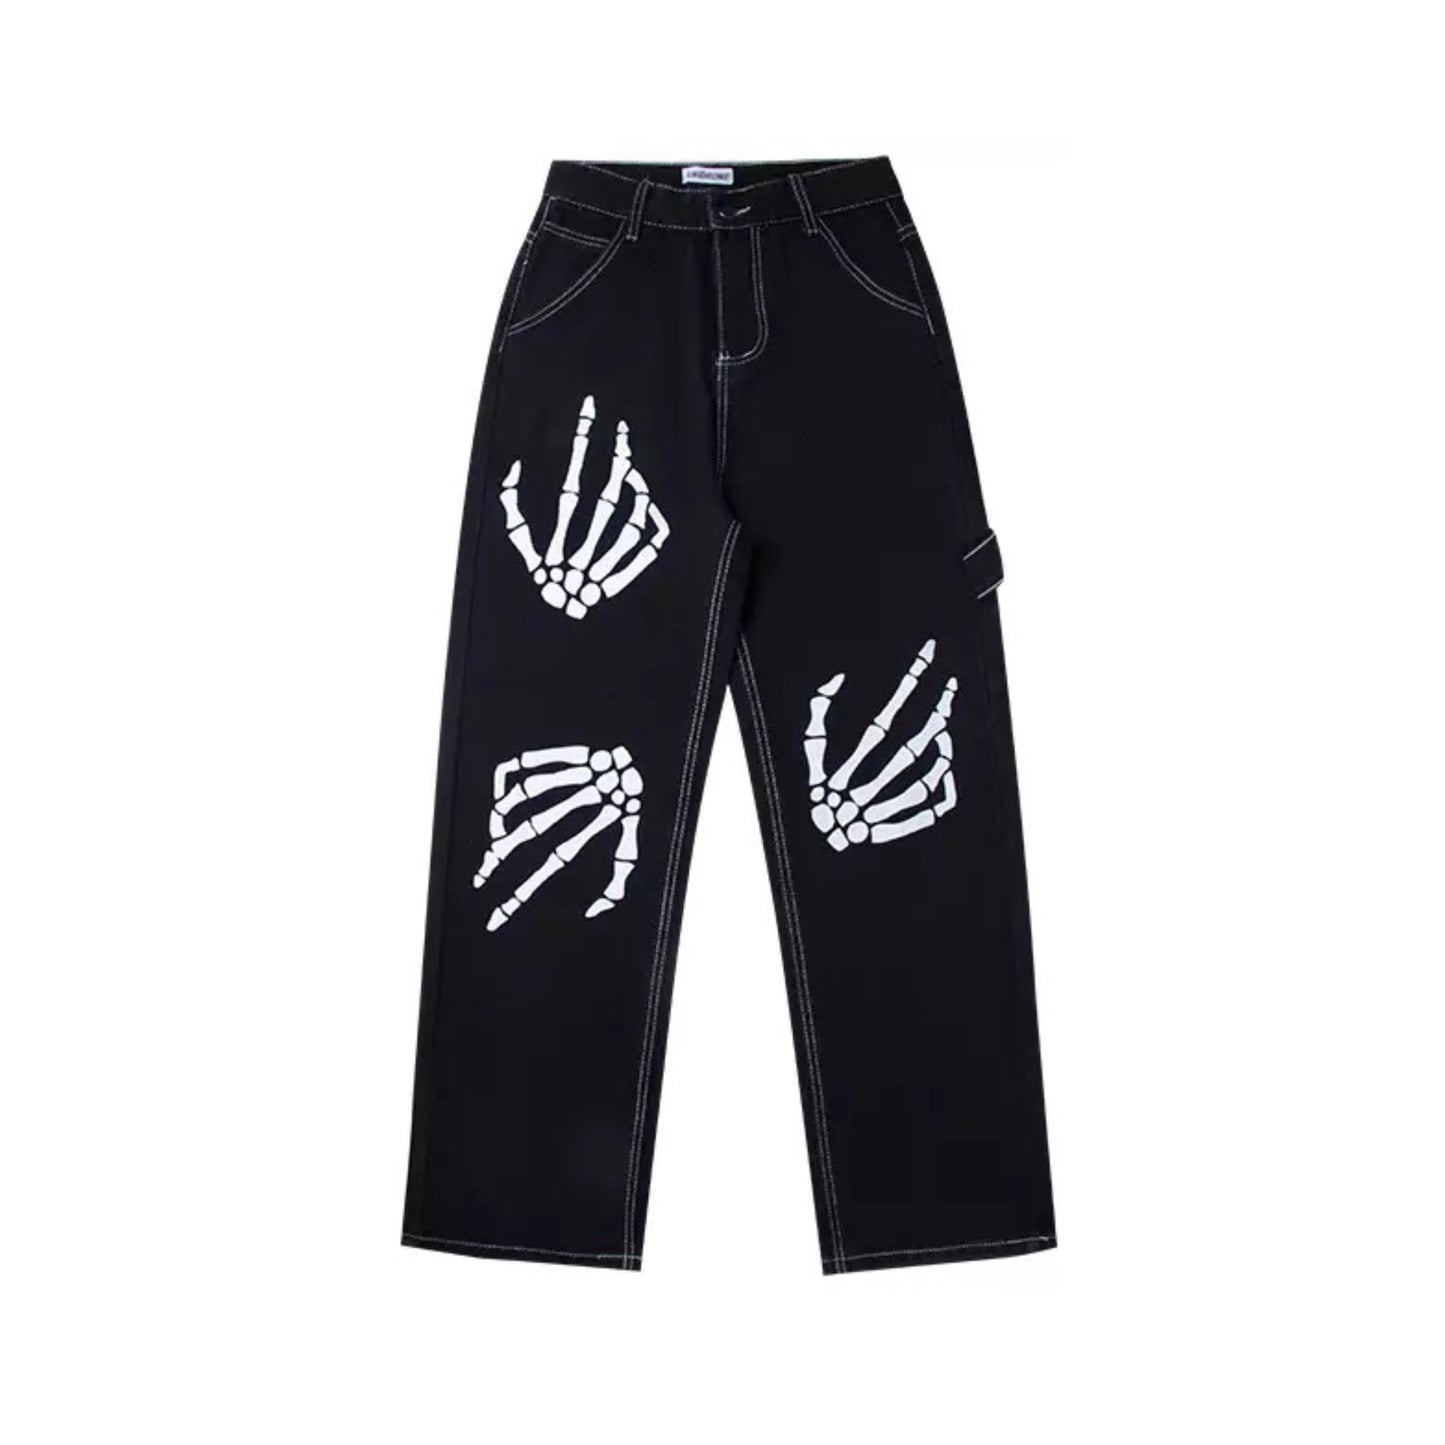 Skeleton Hand Print Pants | Black Jeans For Men and Women